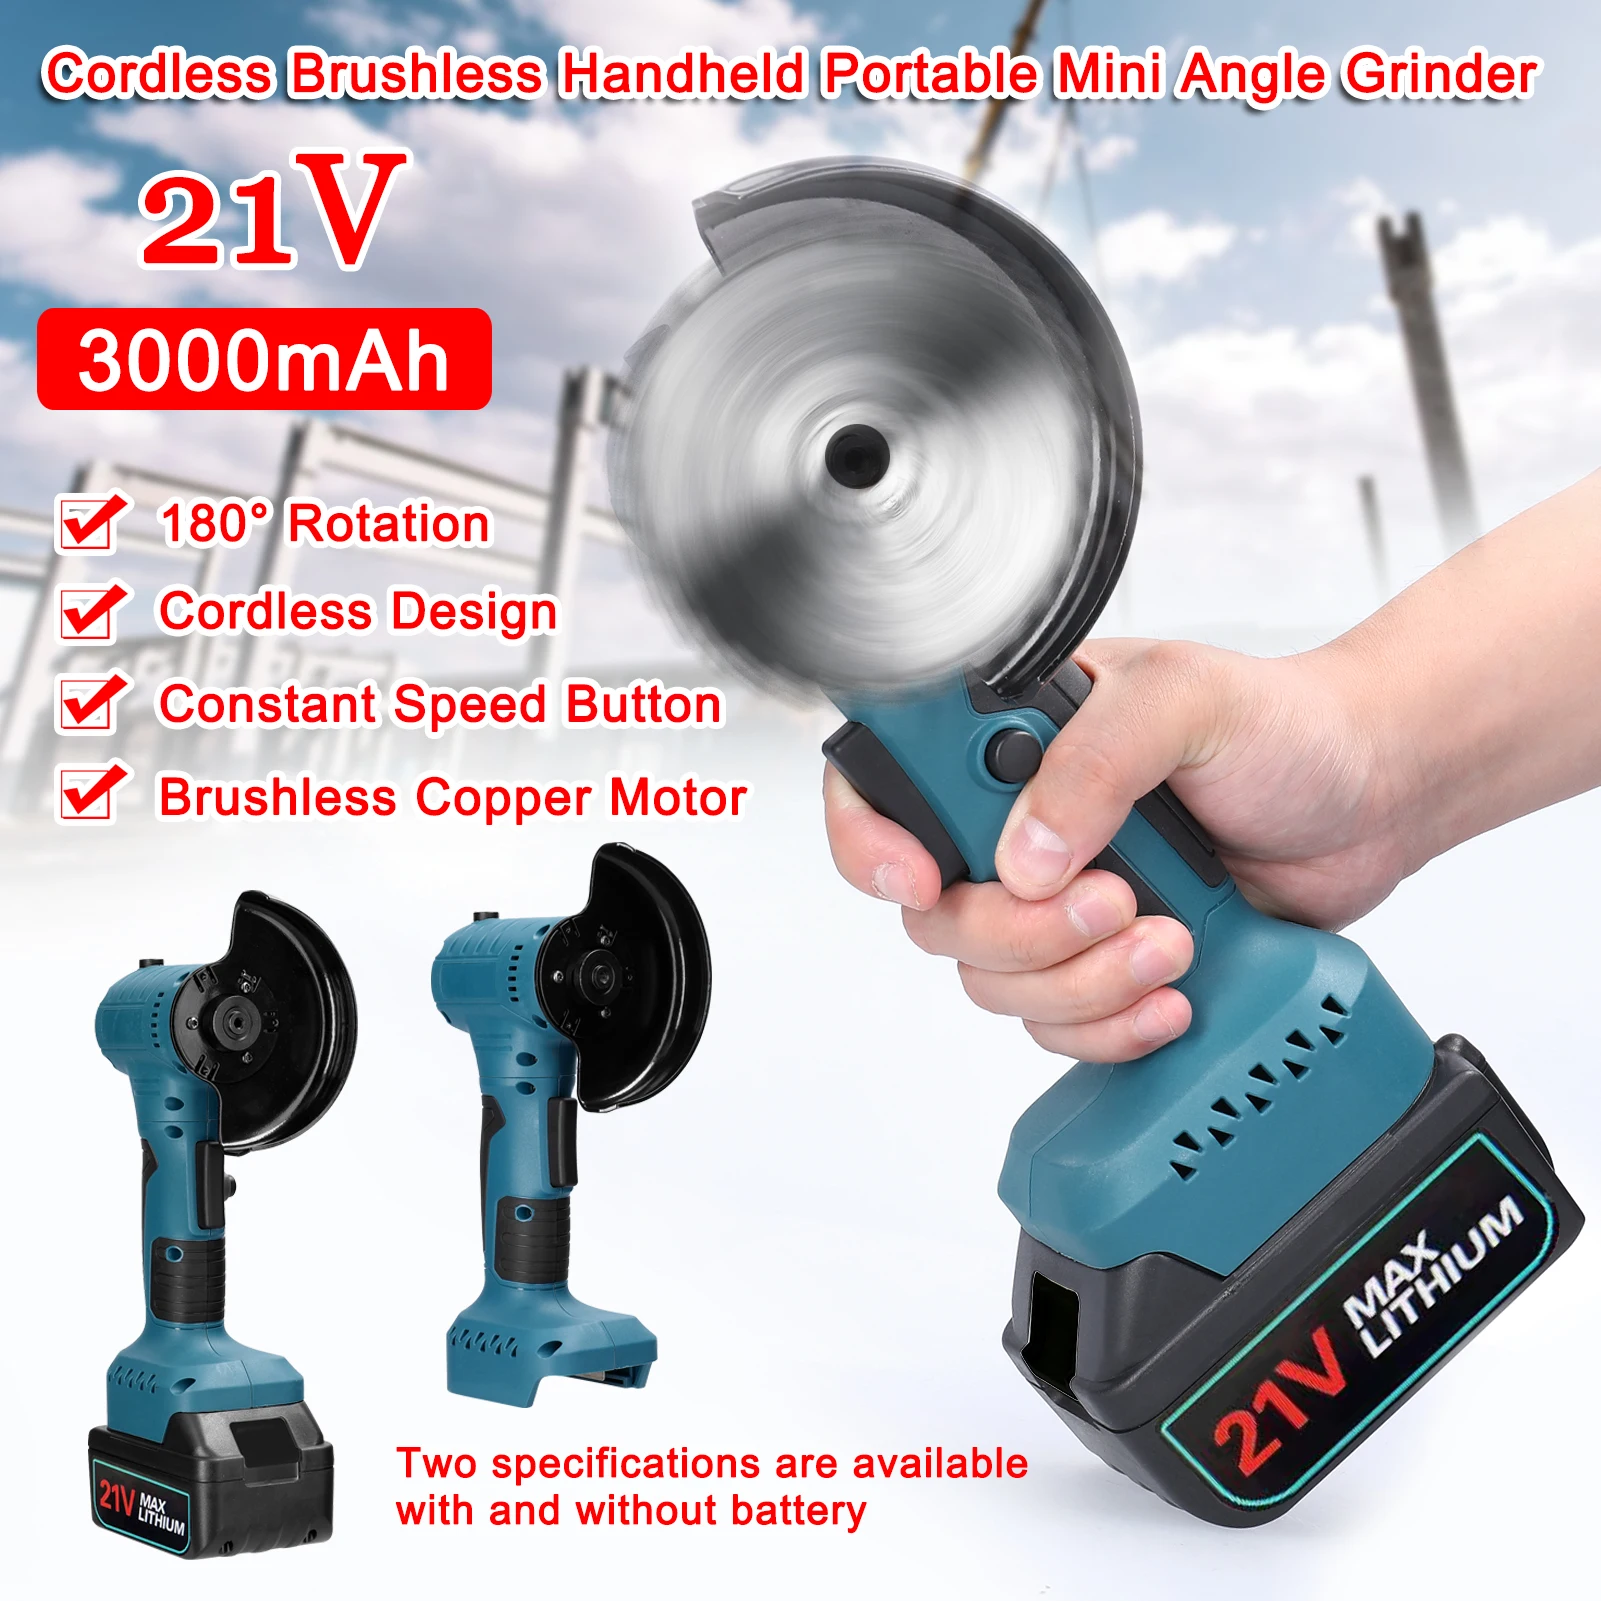 https://ae01.alicdn.com/kf/S982886476e884793af756a7fa3e01845F/Handheld-21V-Cordless-Brushless-Portable-Mini-Angle-Grinder-Rechargeable-180-Rotation-Angle-Grinder-Polishing-Cutting-Machine.jpg